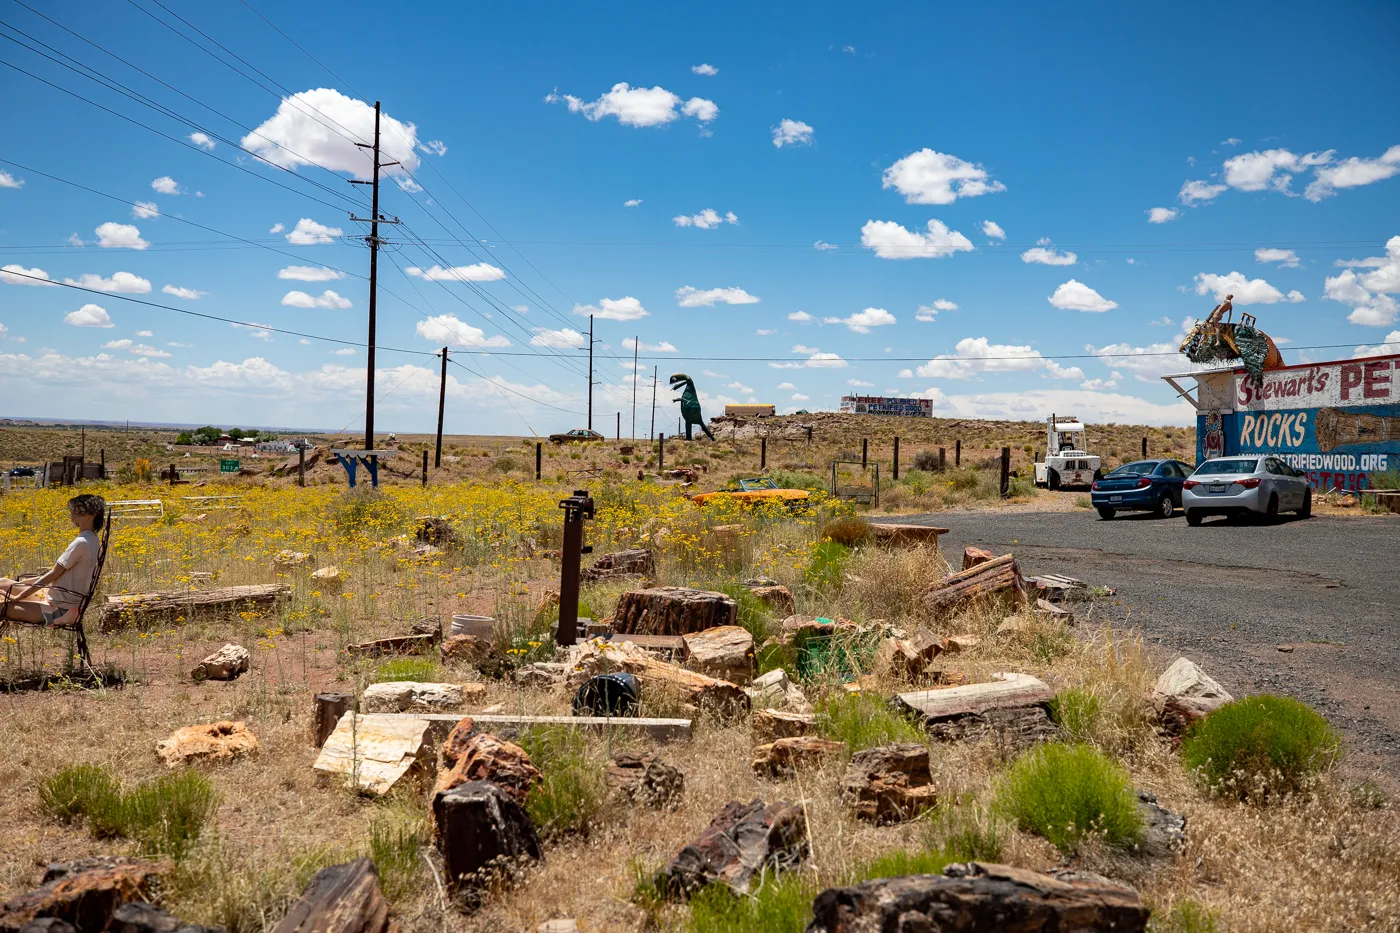 Stewart's Petrified Wood in Holbrook, Arizona Route 66 Roadside Attraction